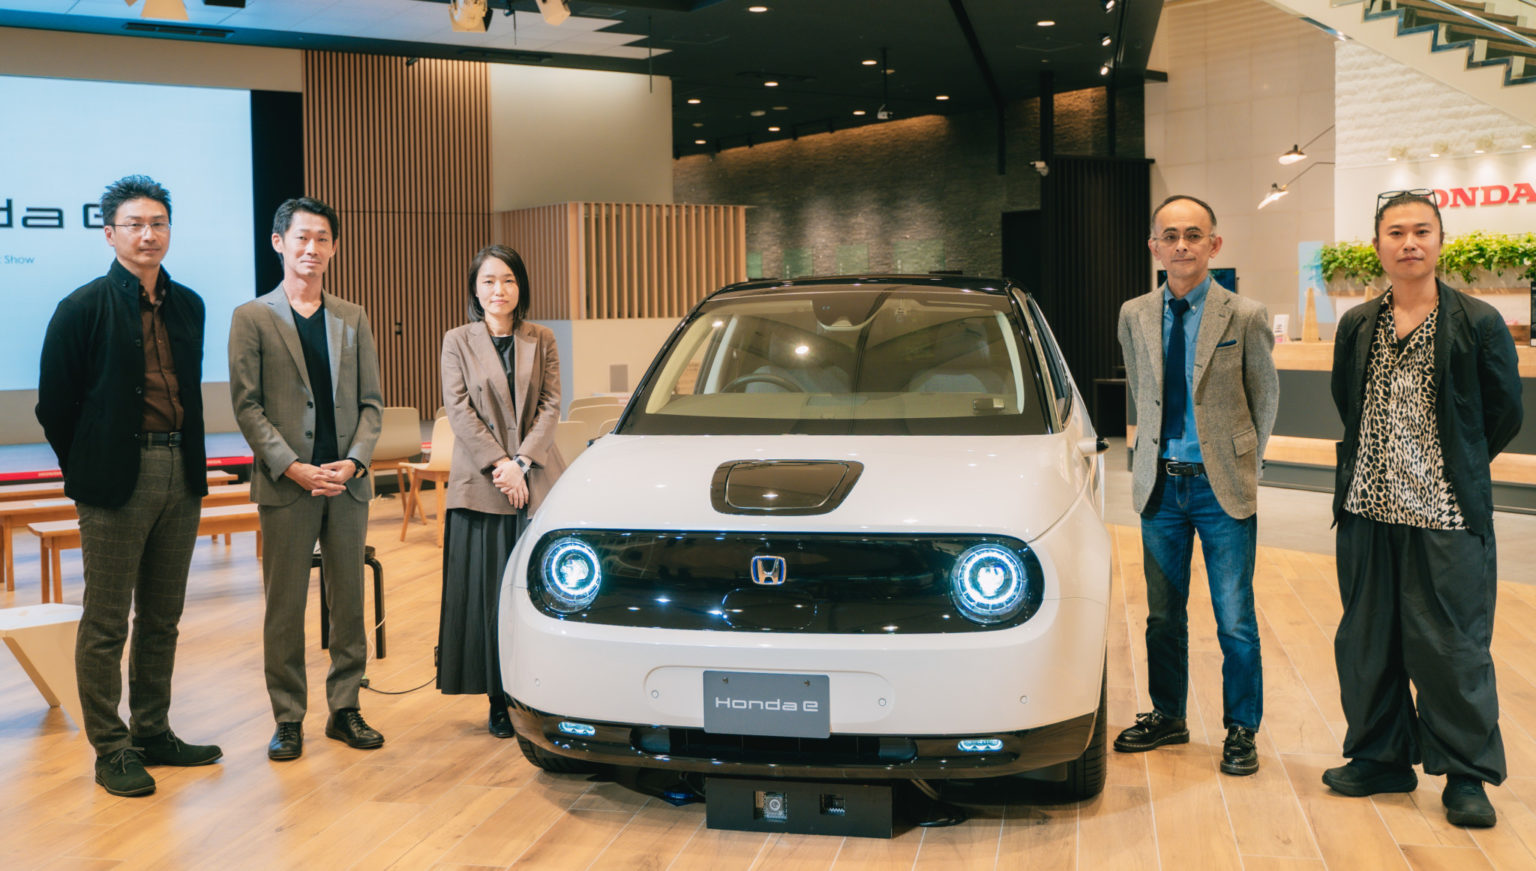 「Honda e」開発に携わったデザインセンターの皆さんと、展示を担当したインテリアスタイリスト川合将人さん（右）。